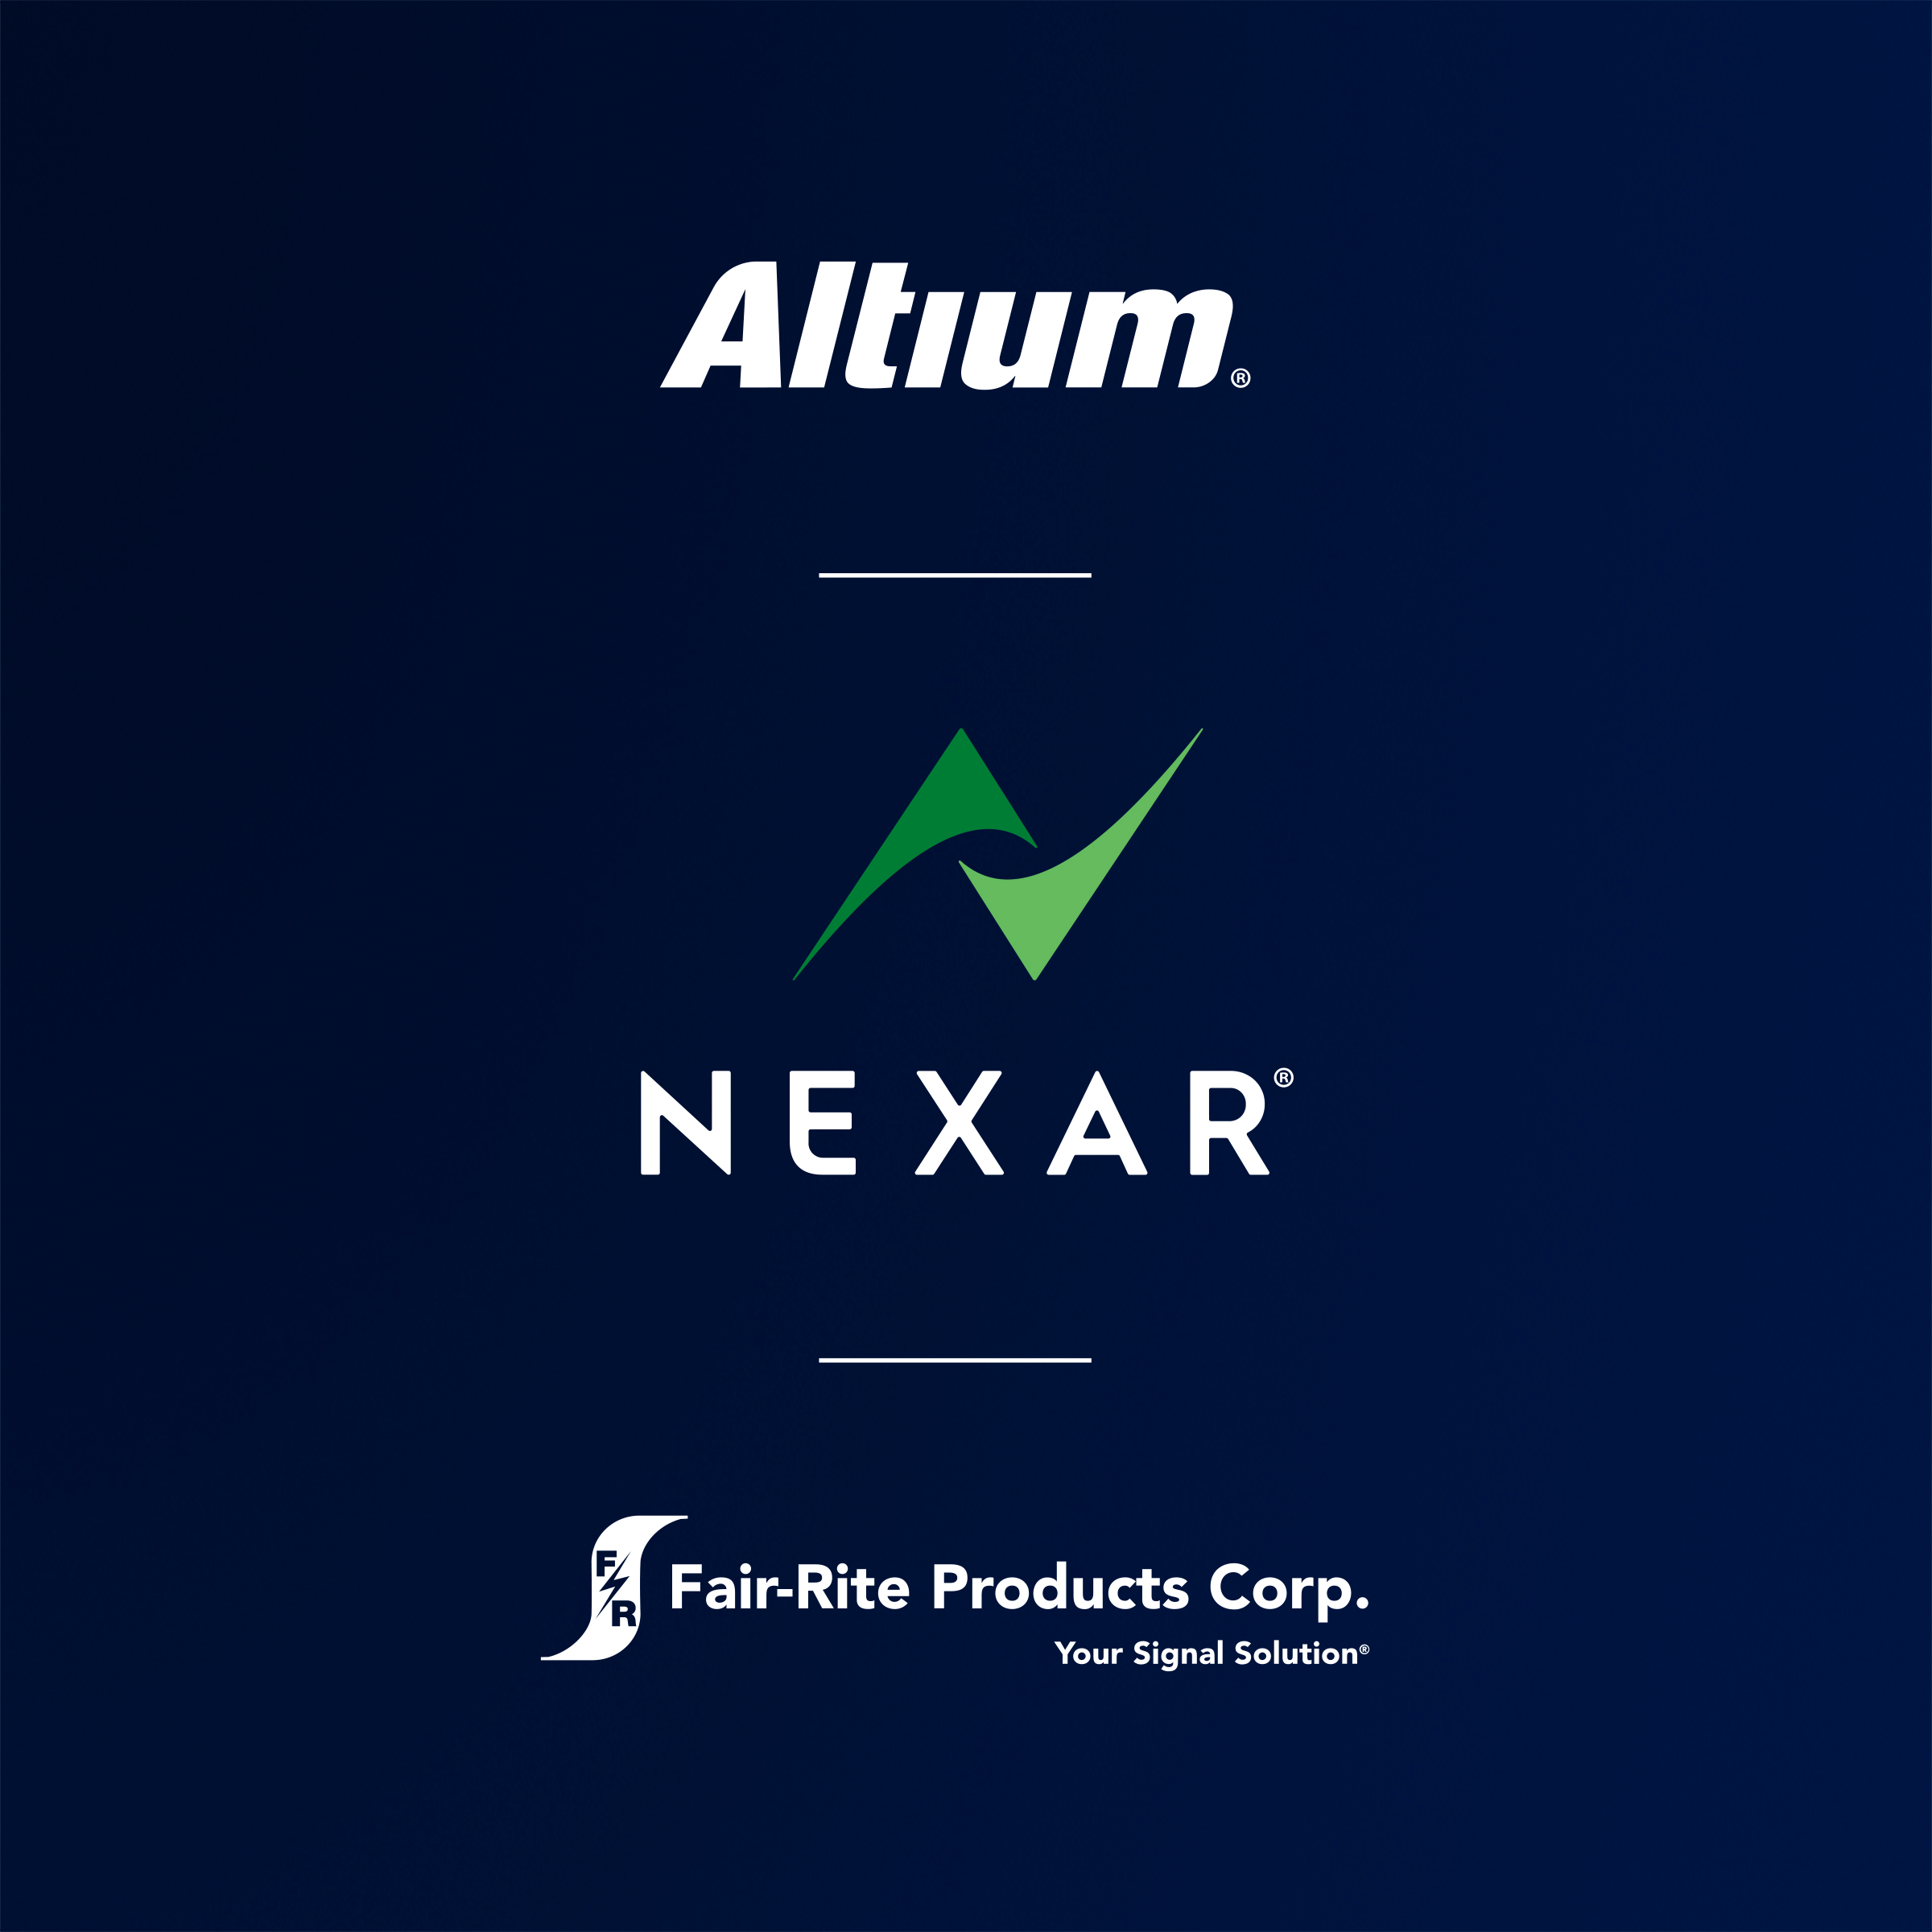 Altium and Fair-Rite Announce New Nexar Partnership